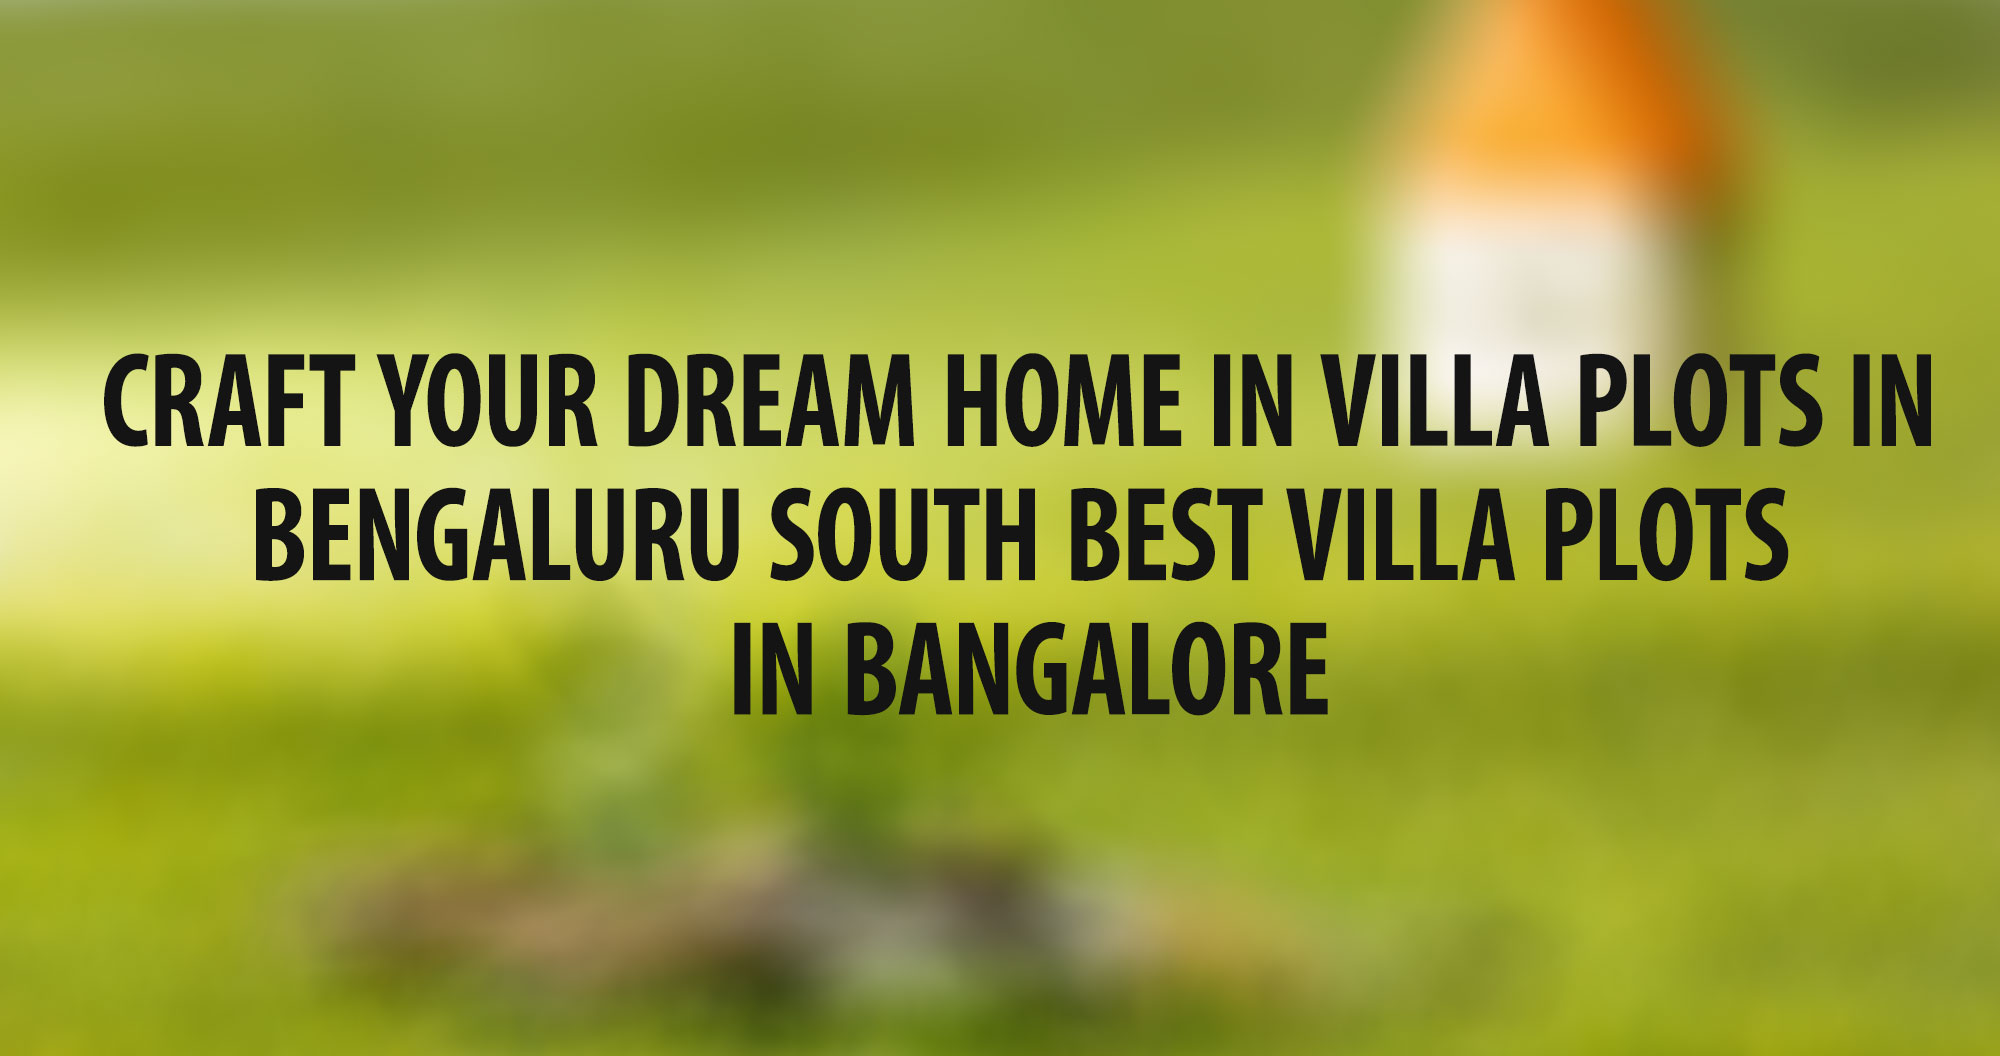 Craft Your Dream Home in Villa Plots in Bengaluru SouthBest Villa Plots in Bangalore